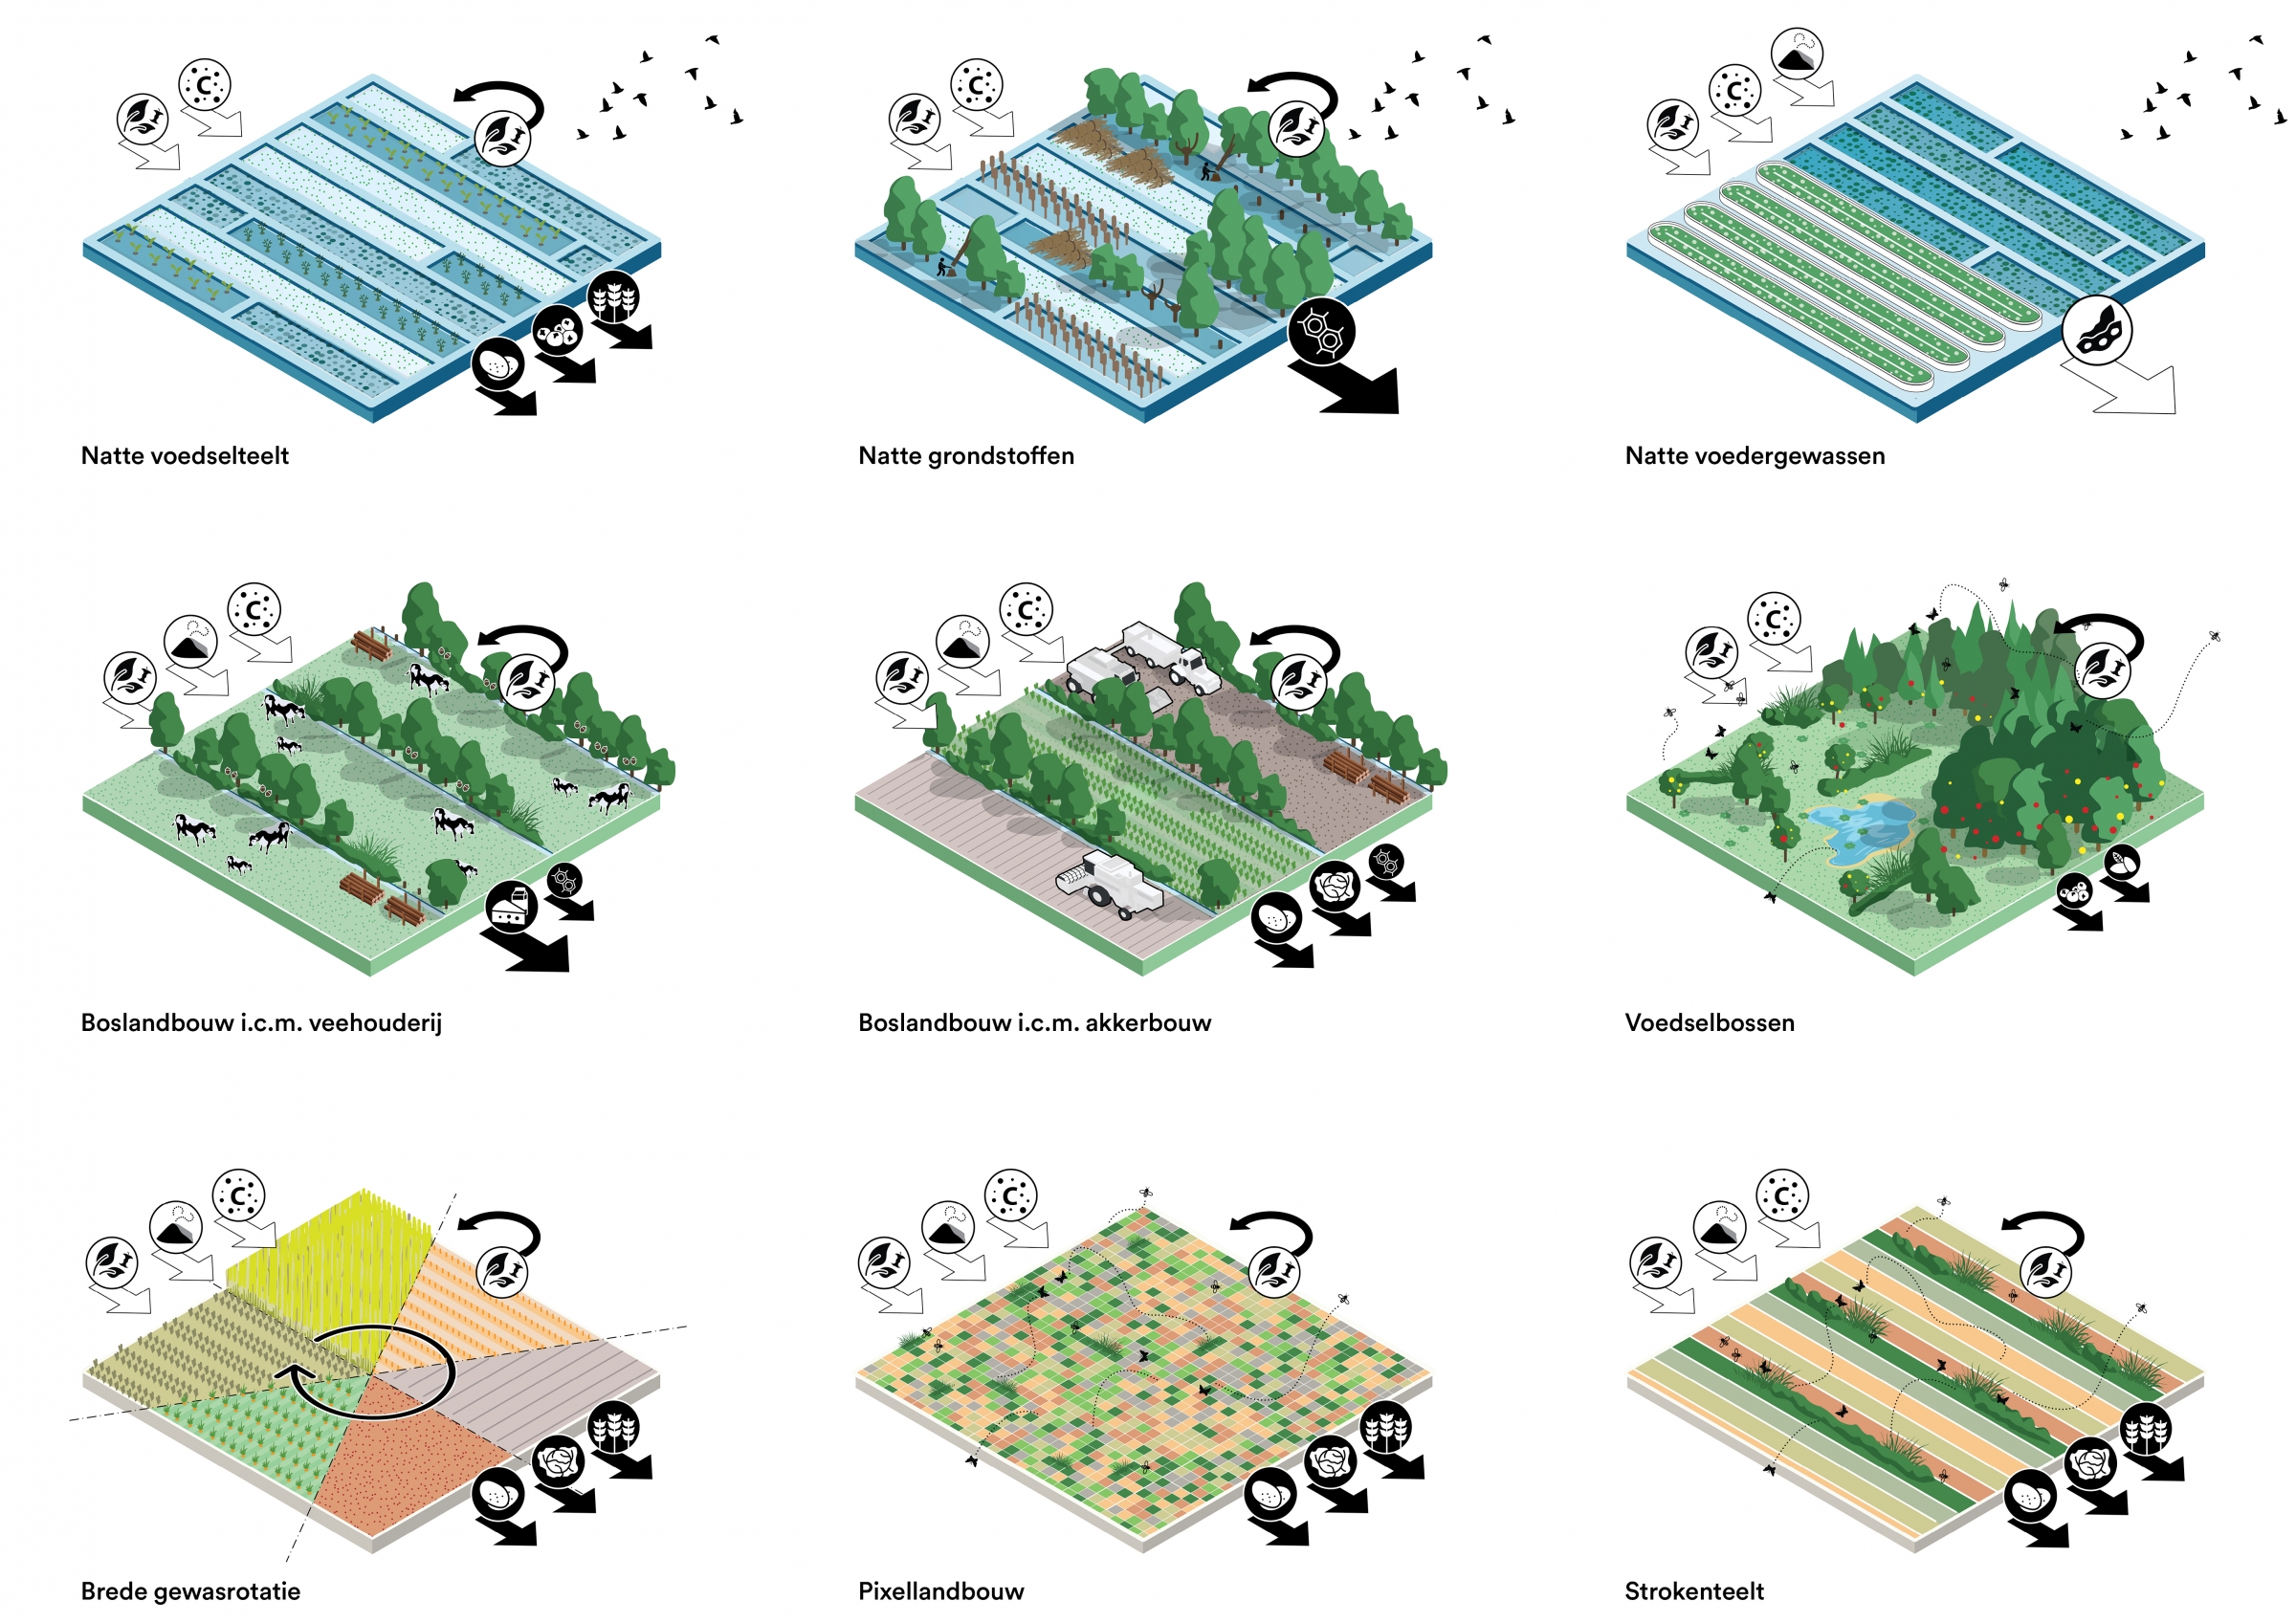 Eighteen different farming building blocks